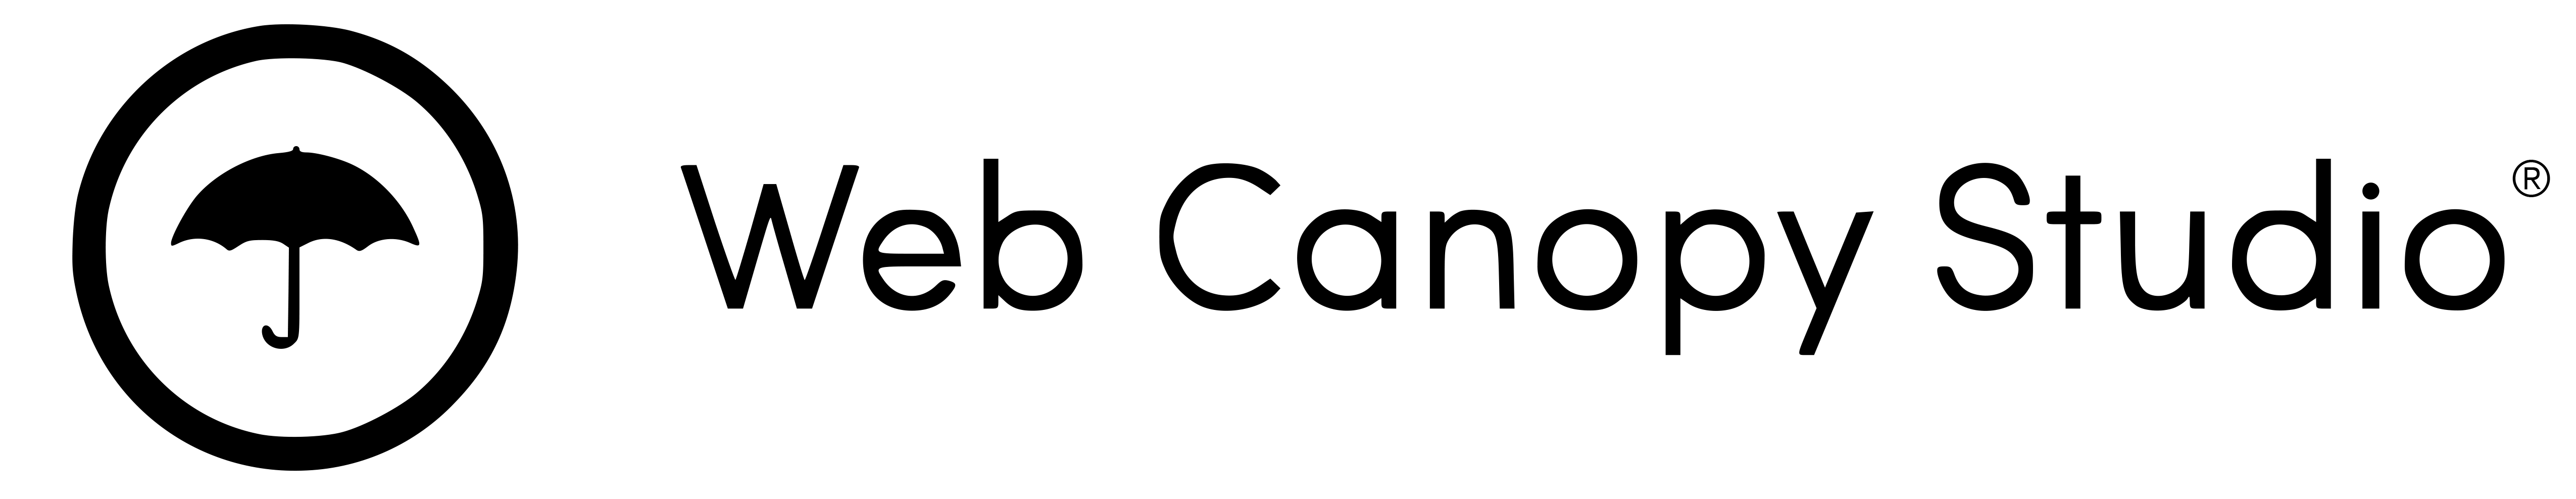 wcs-black-r-logo-1